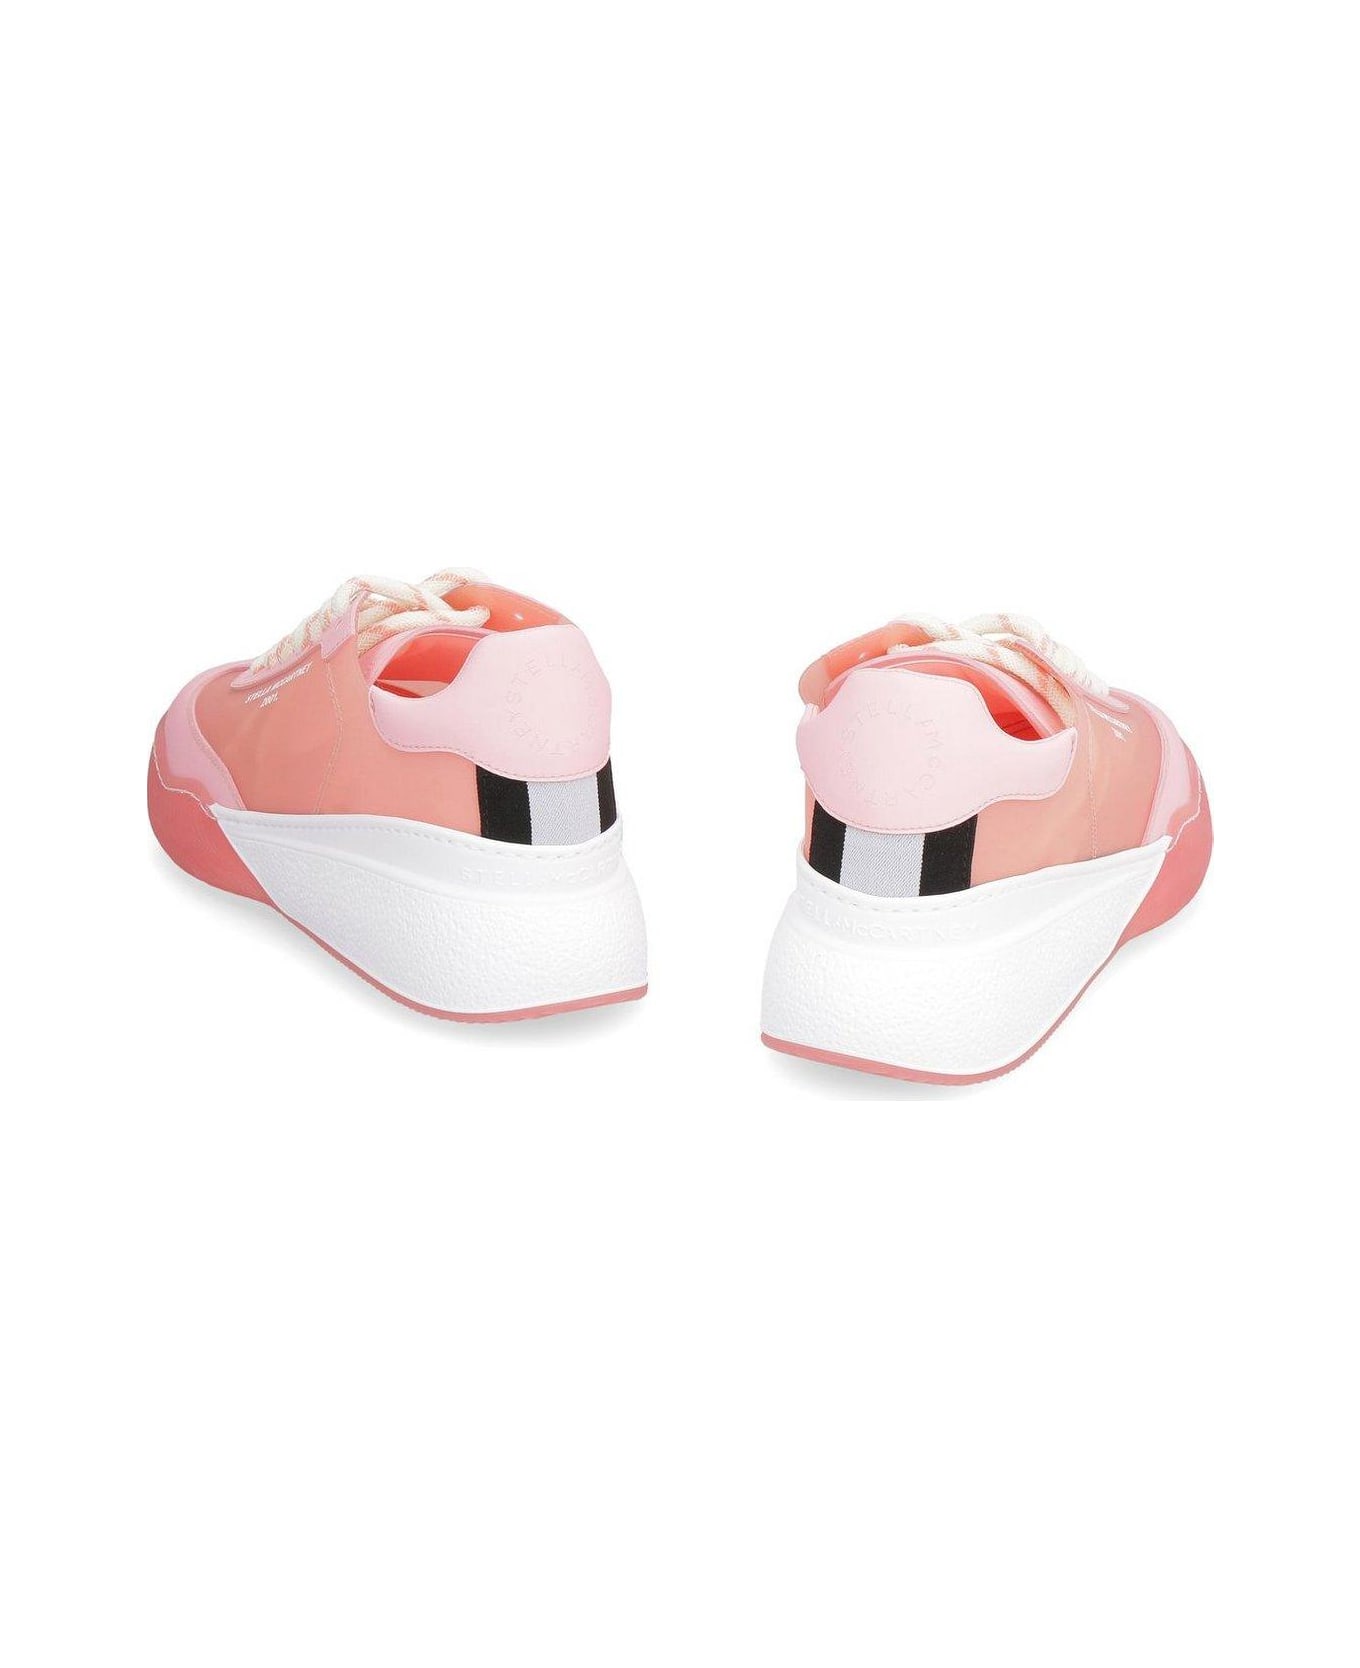 Stella McCartney Loop Lace-up Sneakers - Pink ウェッジシューズ